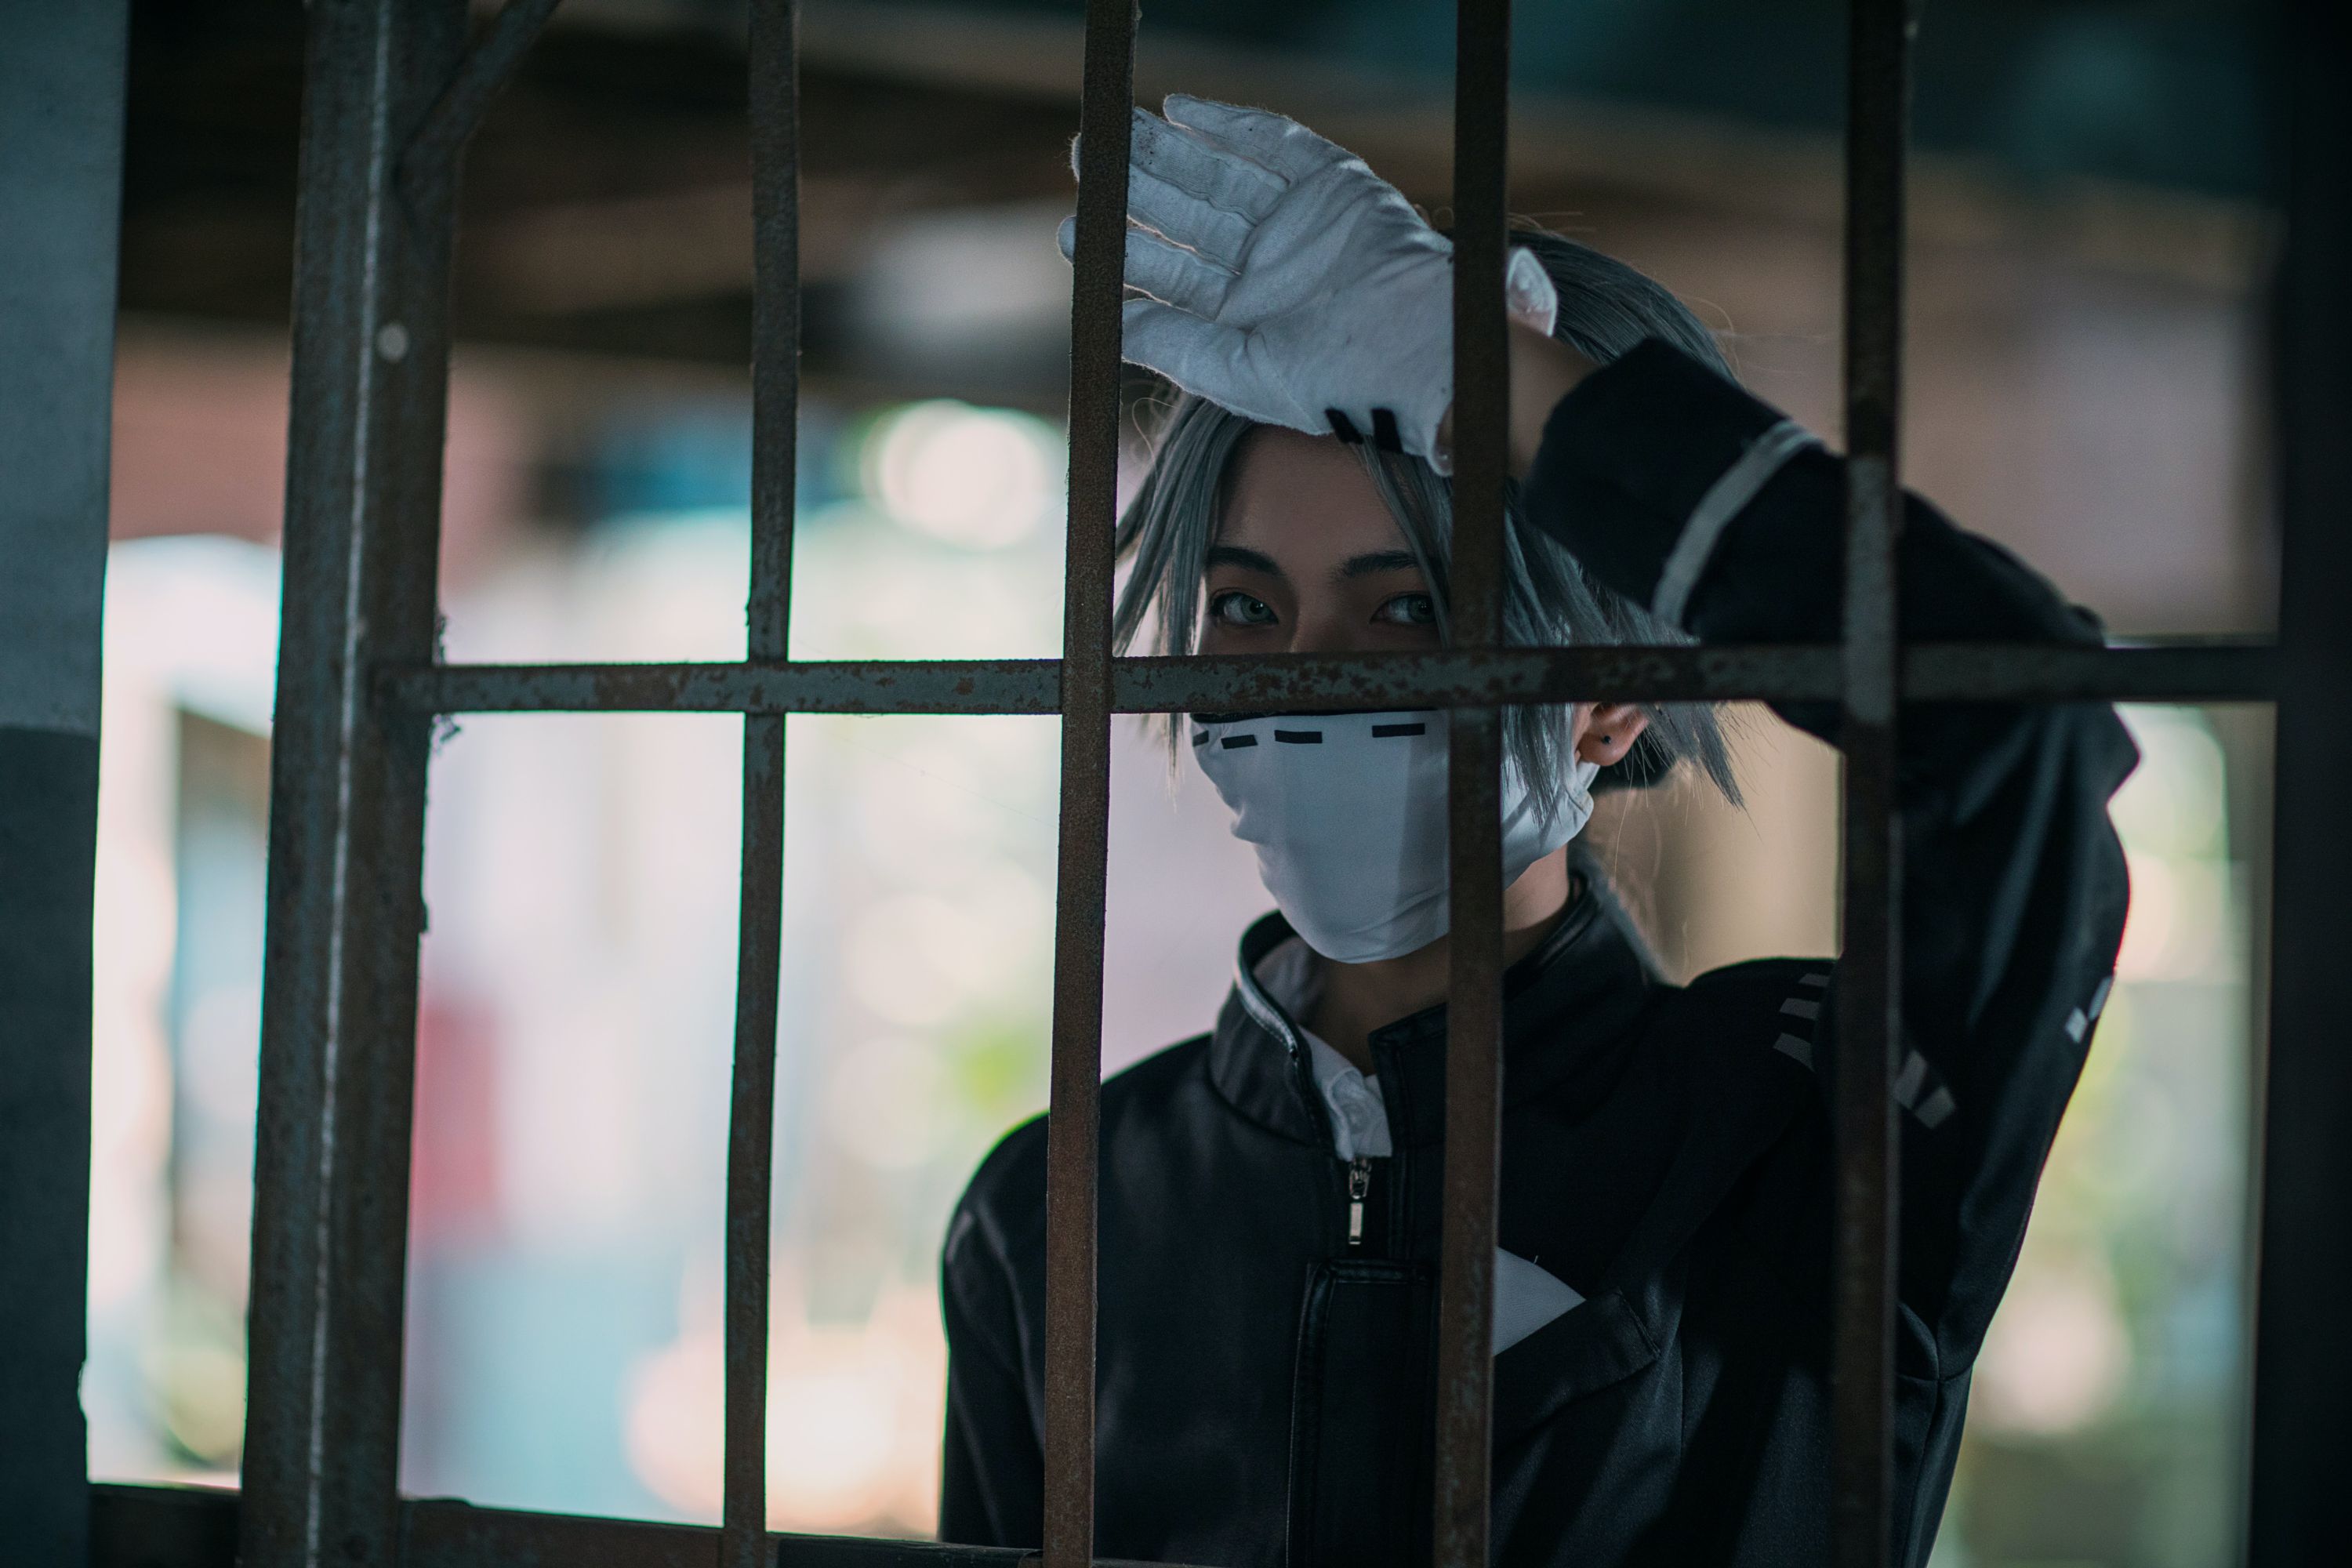 Man behind bars wearing mask